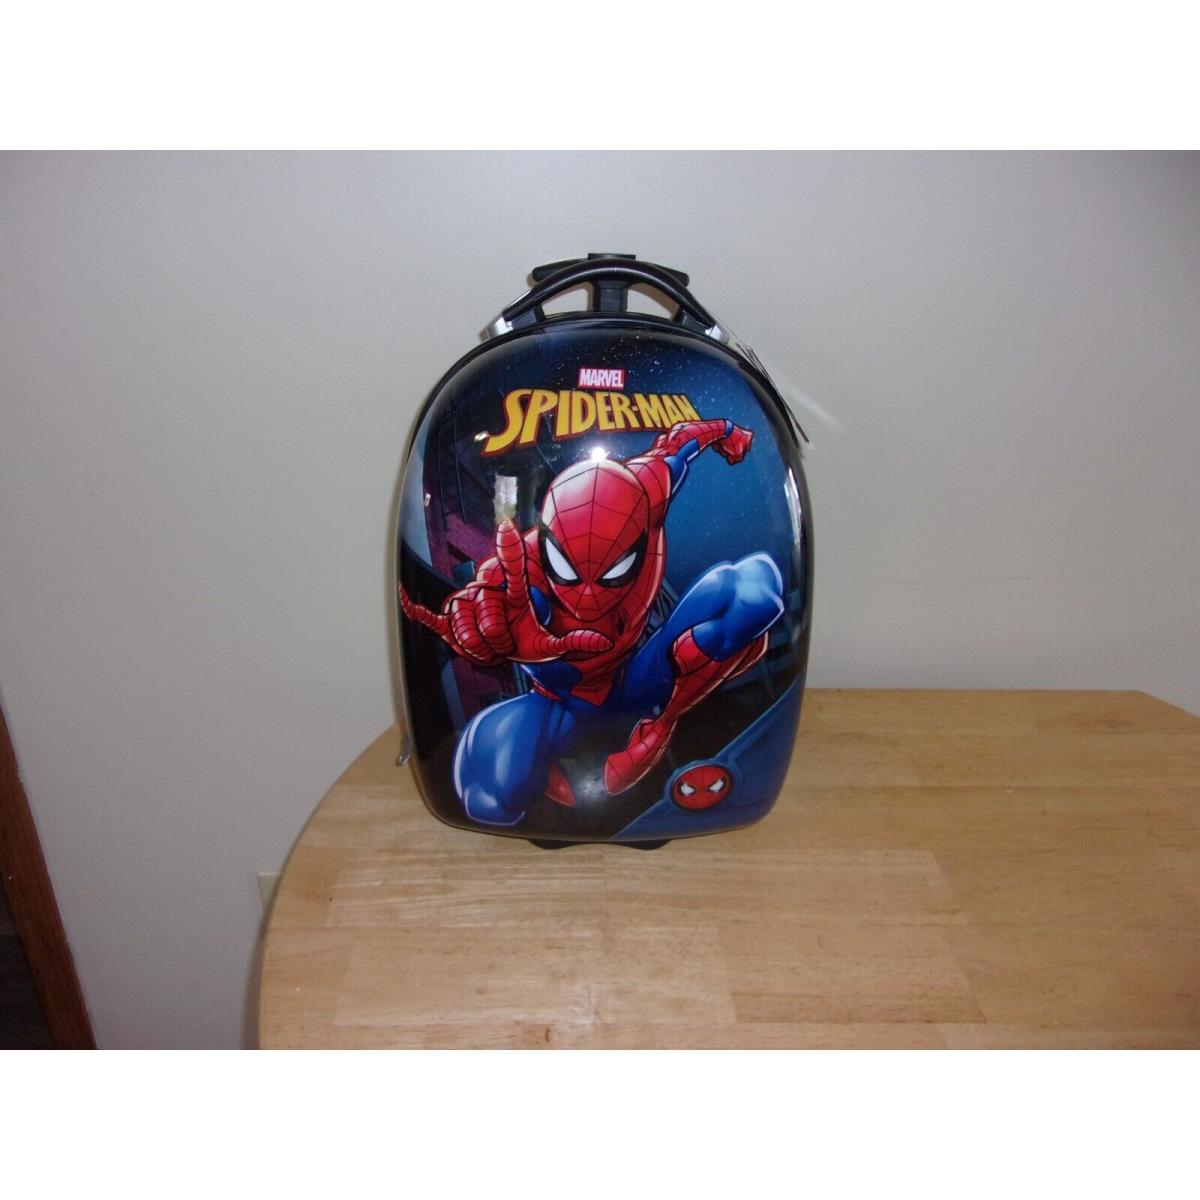 Marvel Spiderman Heys Hardside Kids Carry On 18 Wheel Rolling Luggage Bag Black